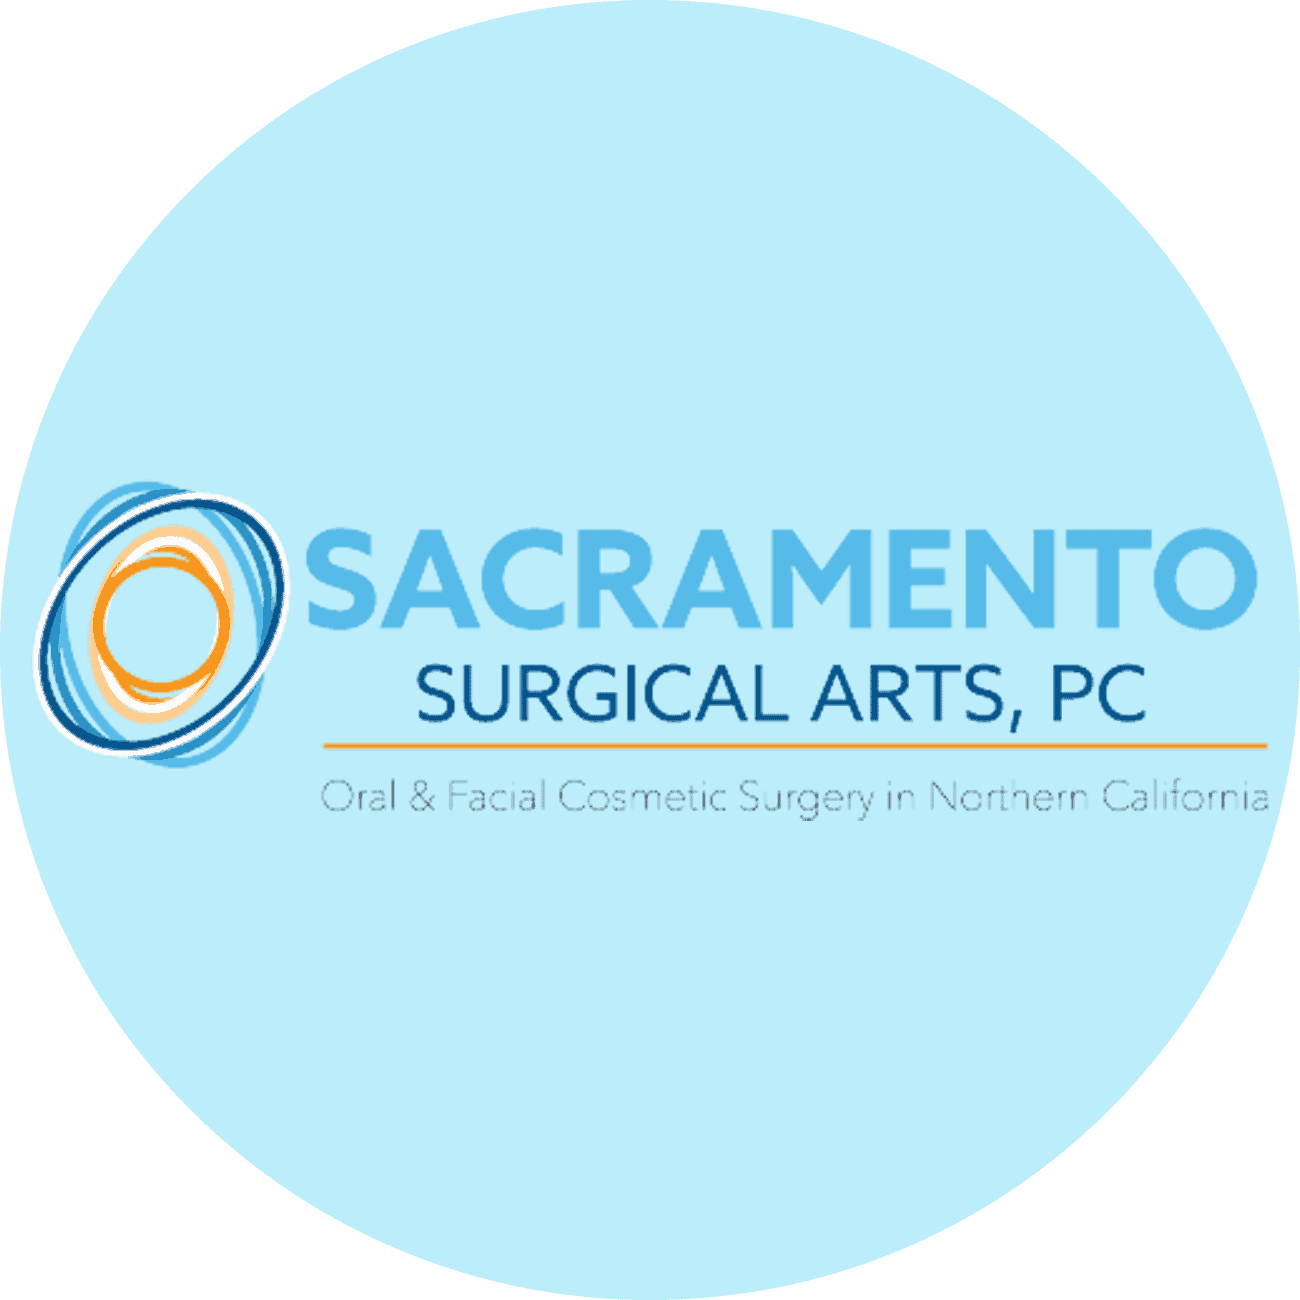 Alexander P, Director of Operations, Sacramento Surgical Arts, PC.